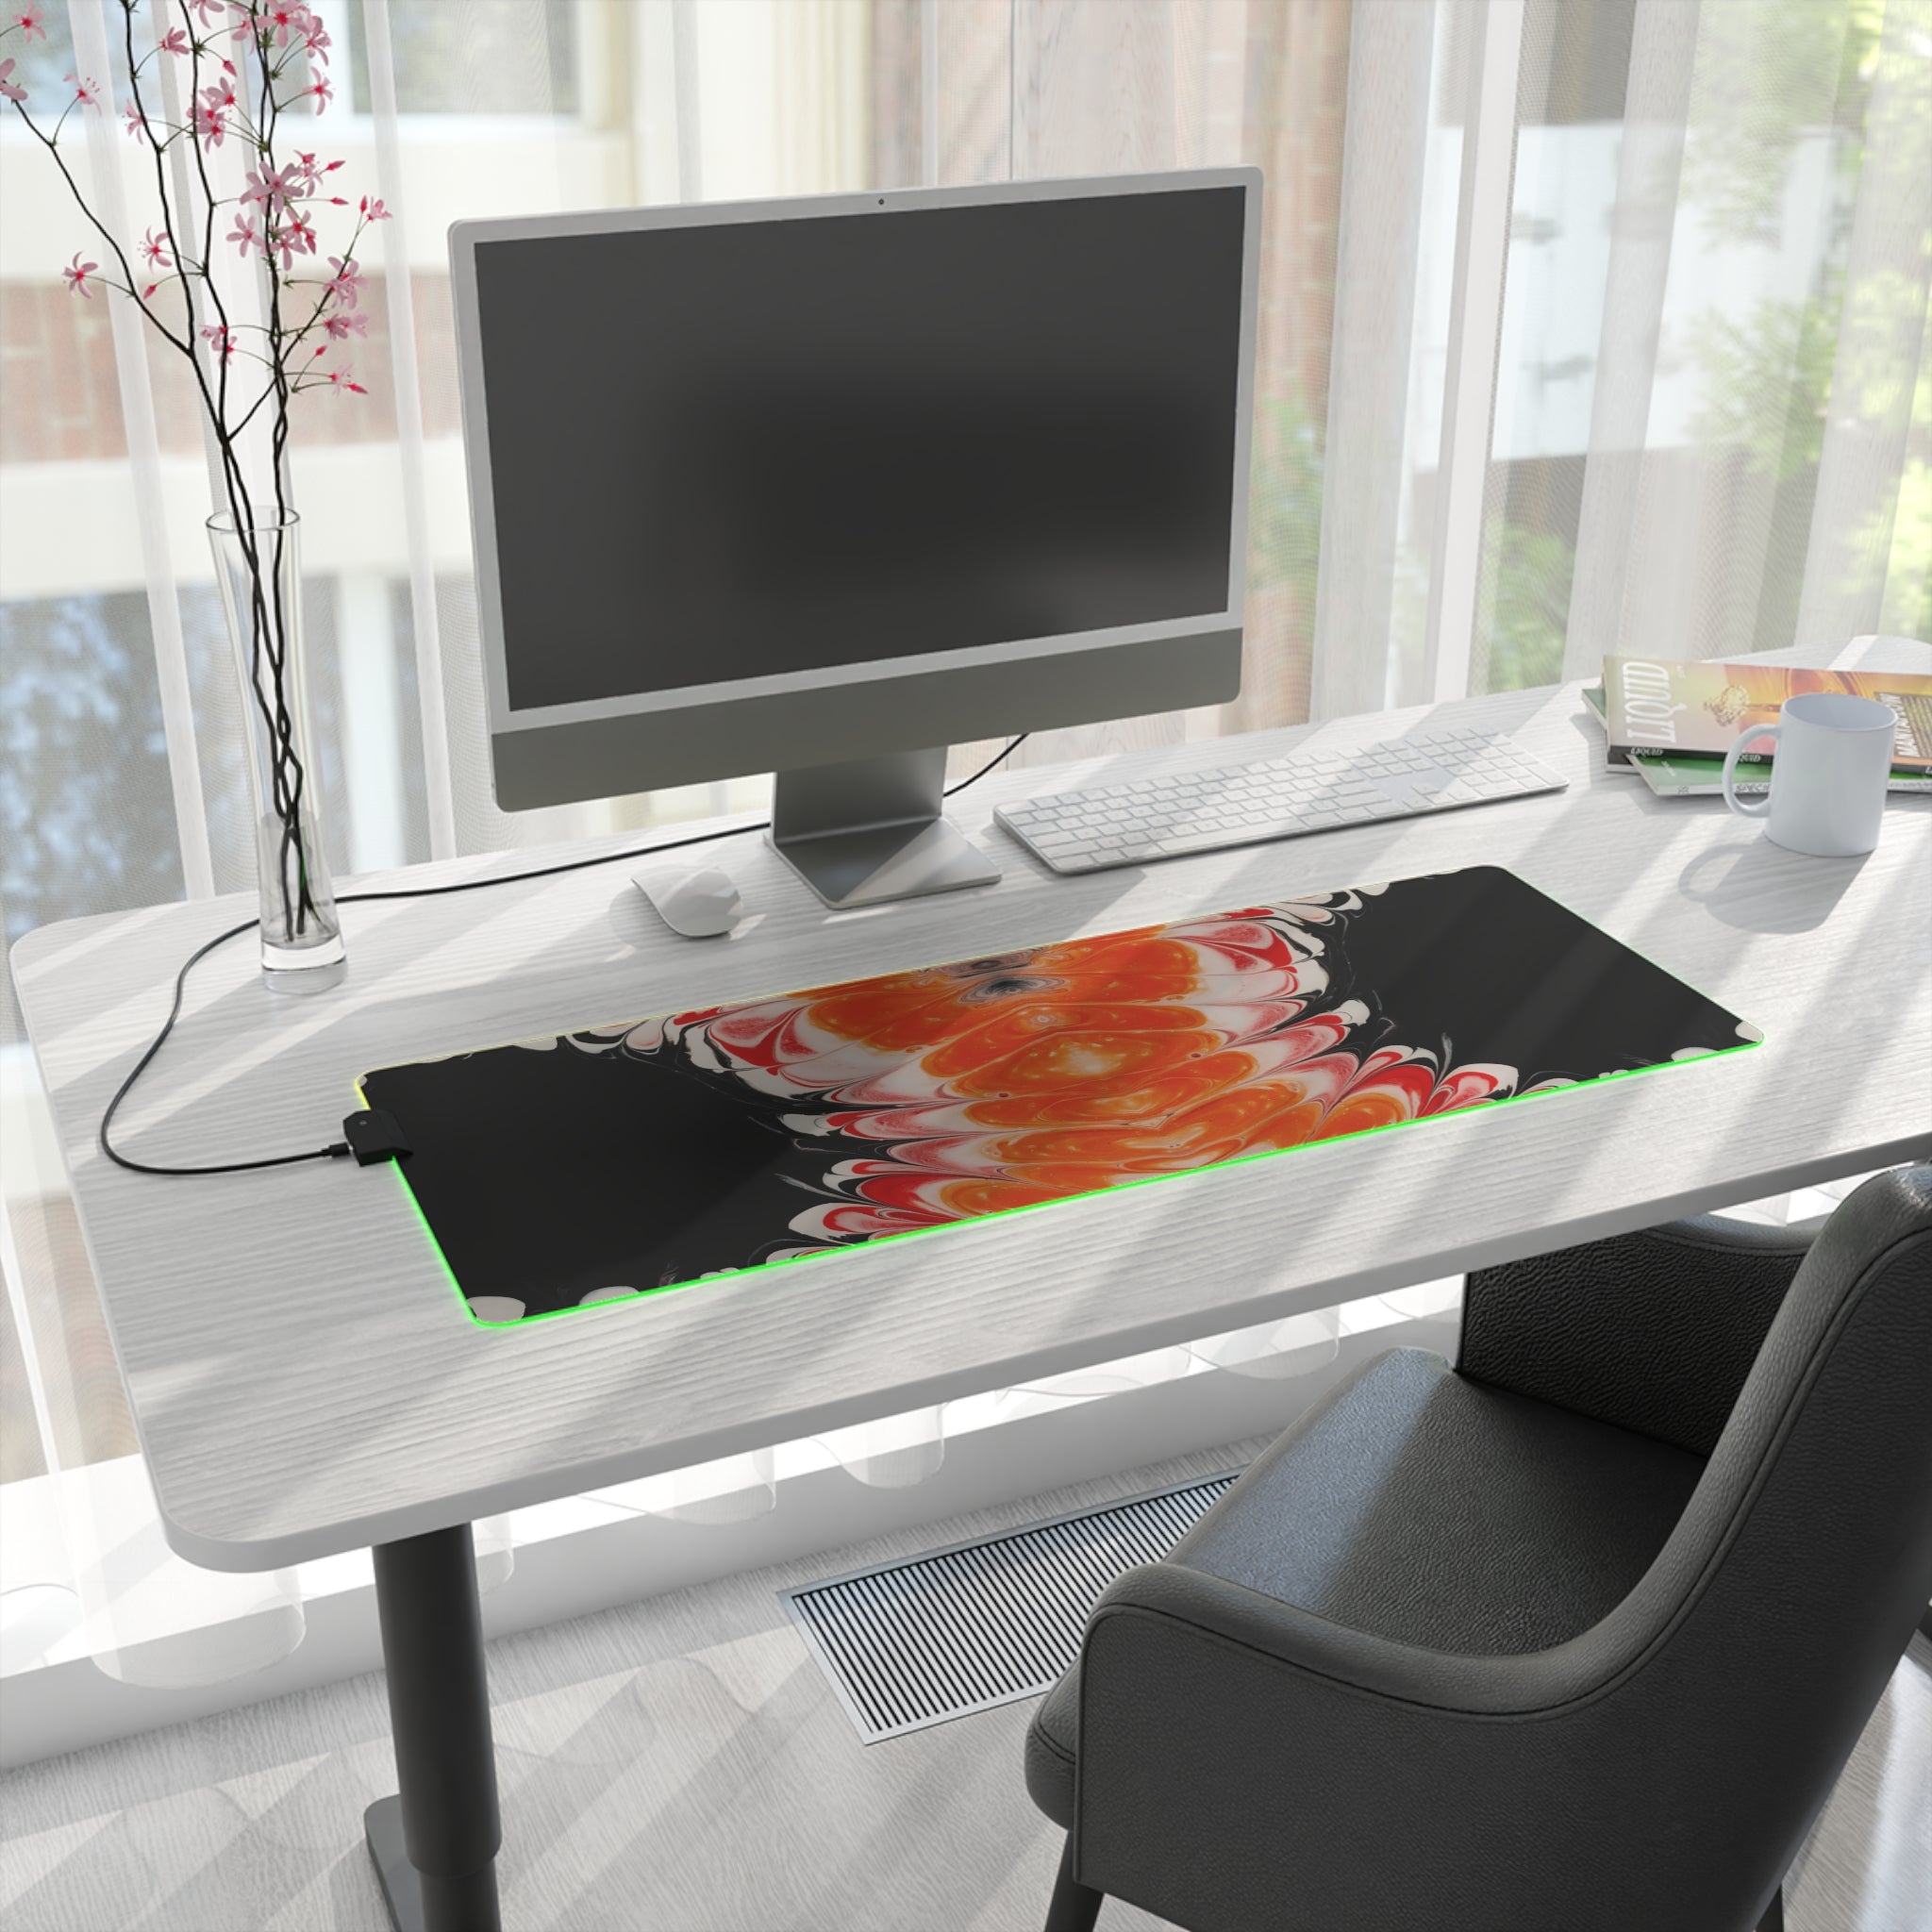 Cameron Creations - LED Gaming Mouse Pad - Ventanus Portal - 31"x11"